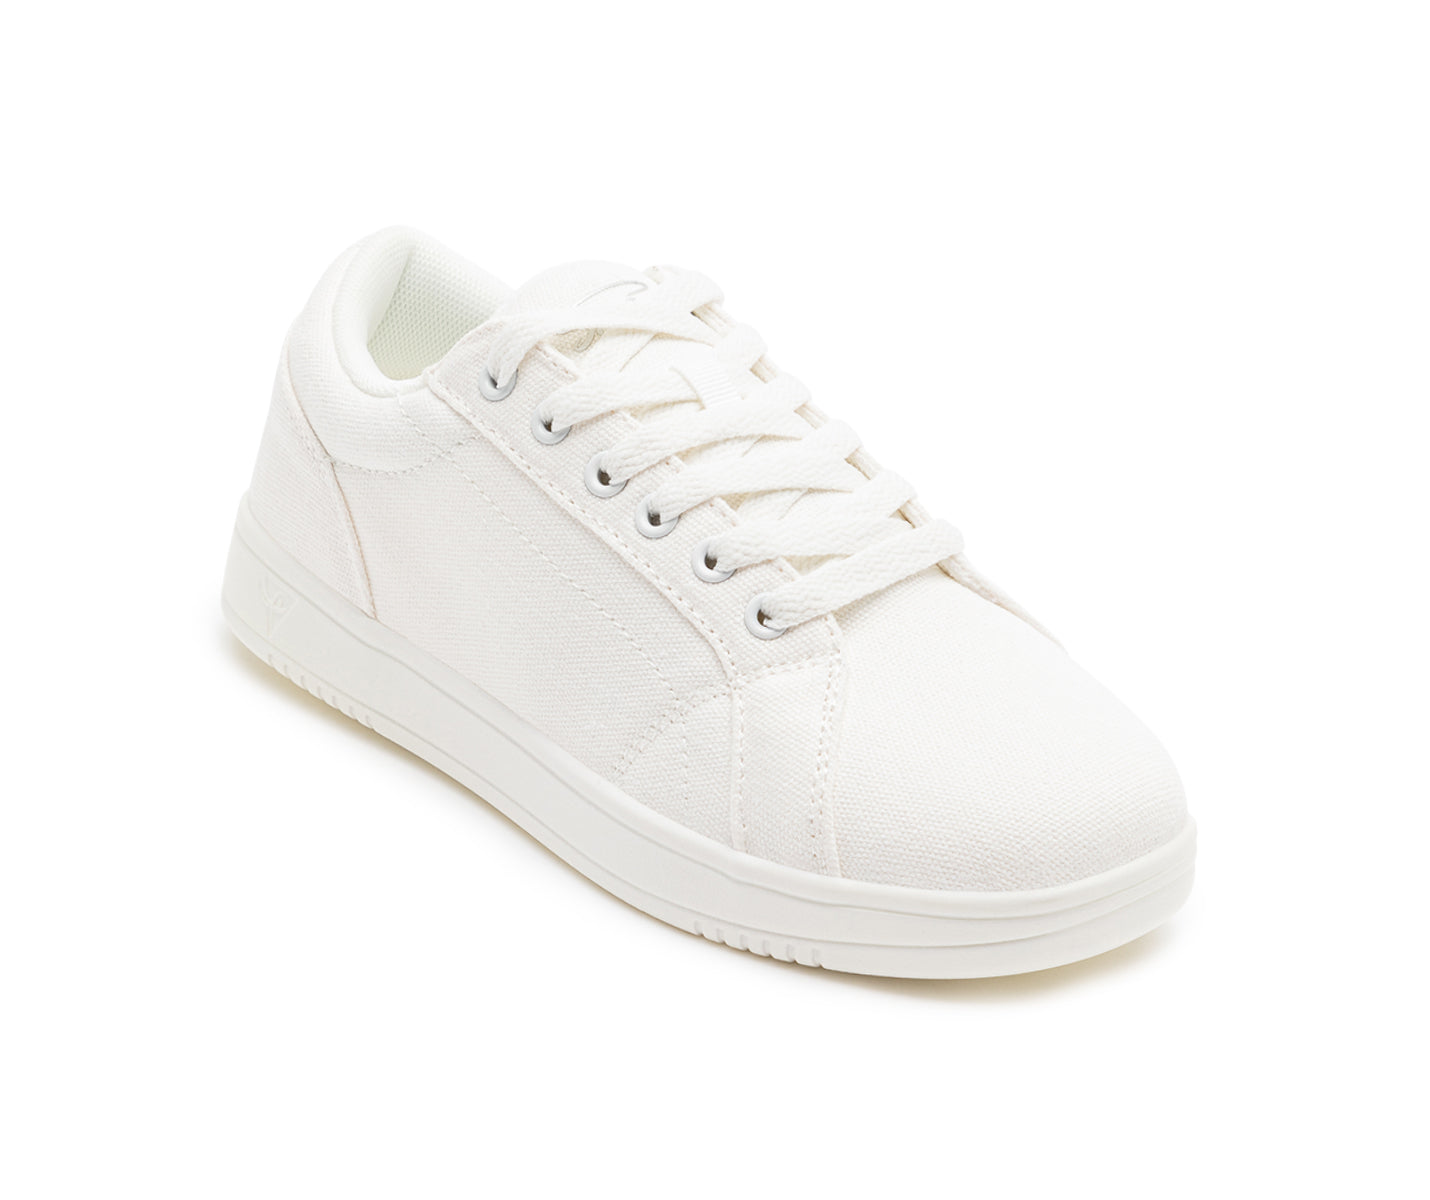 Smove dance sneaker in white